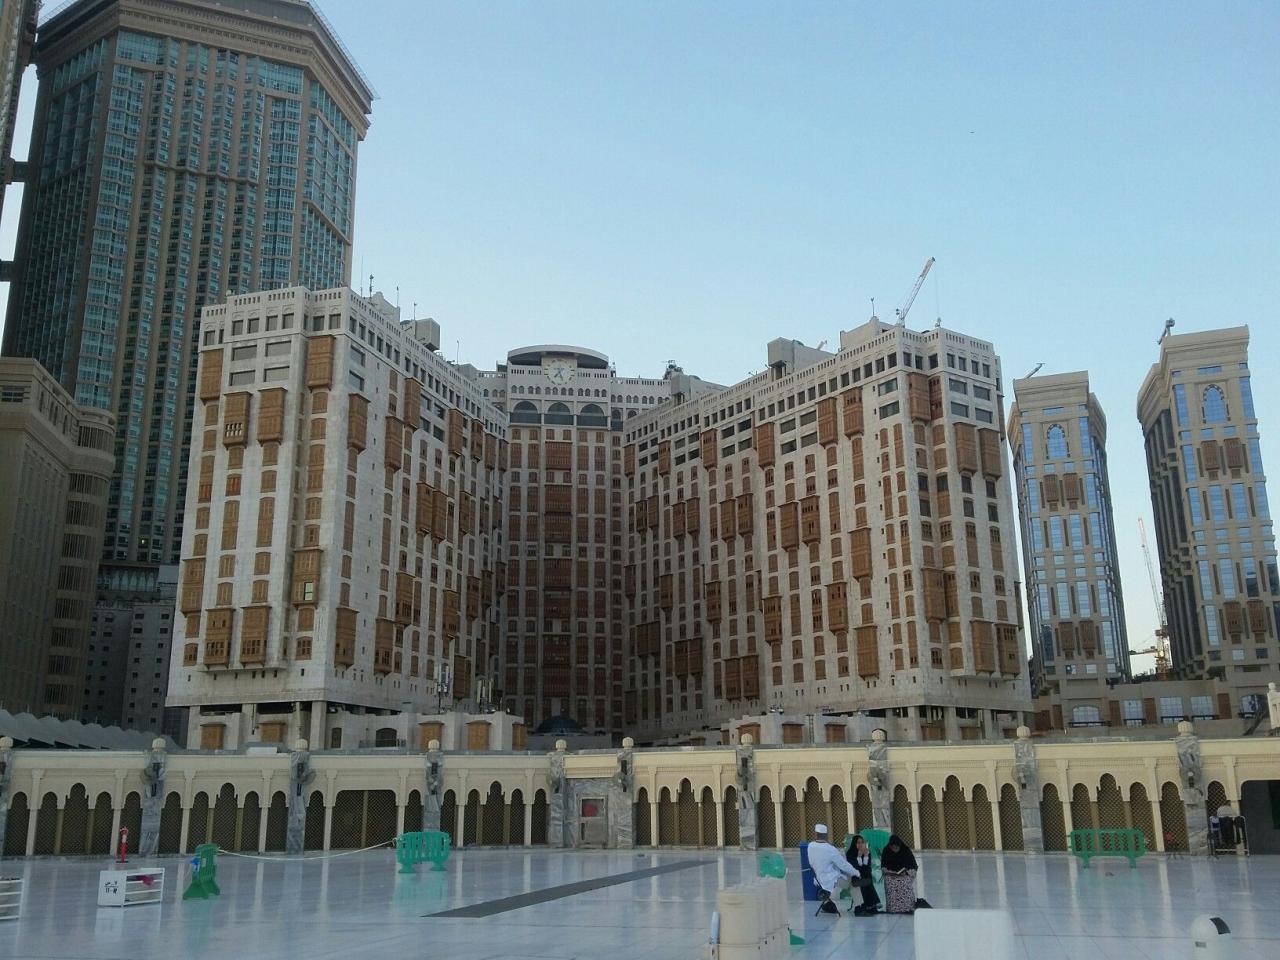 Makkah ticati noministnow